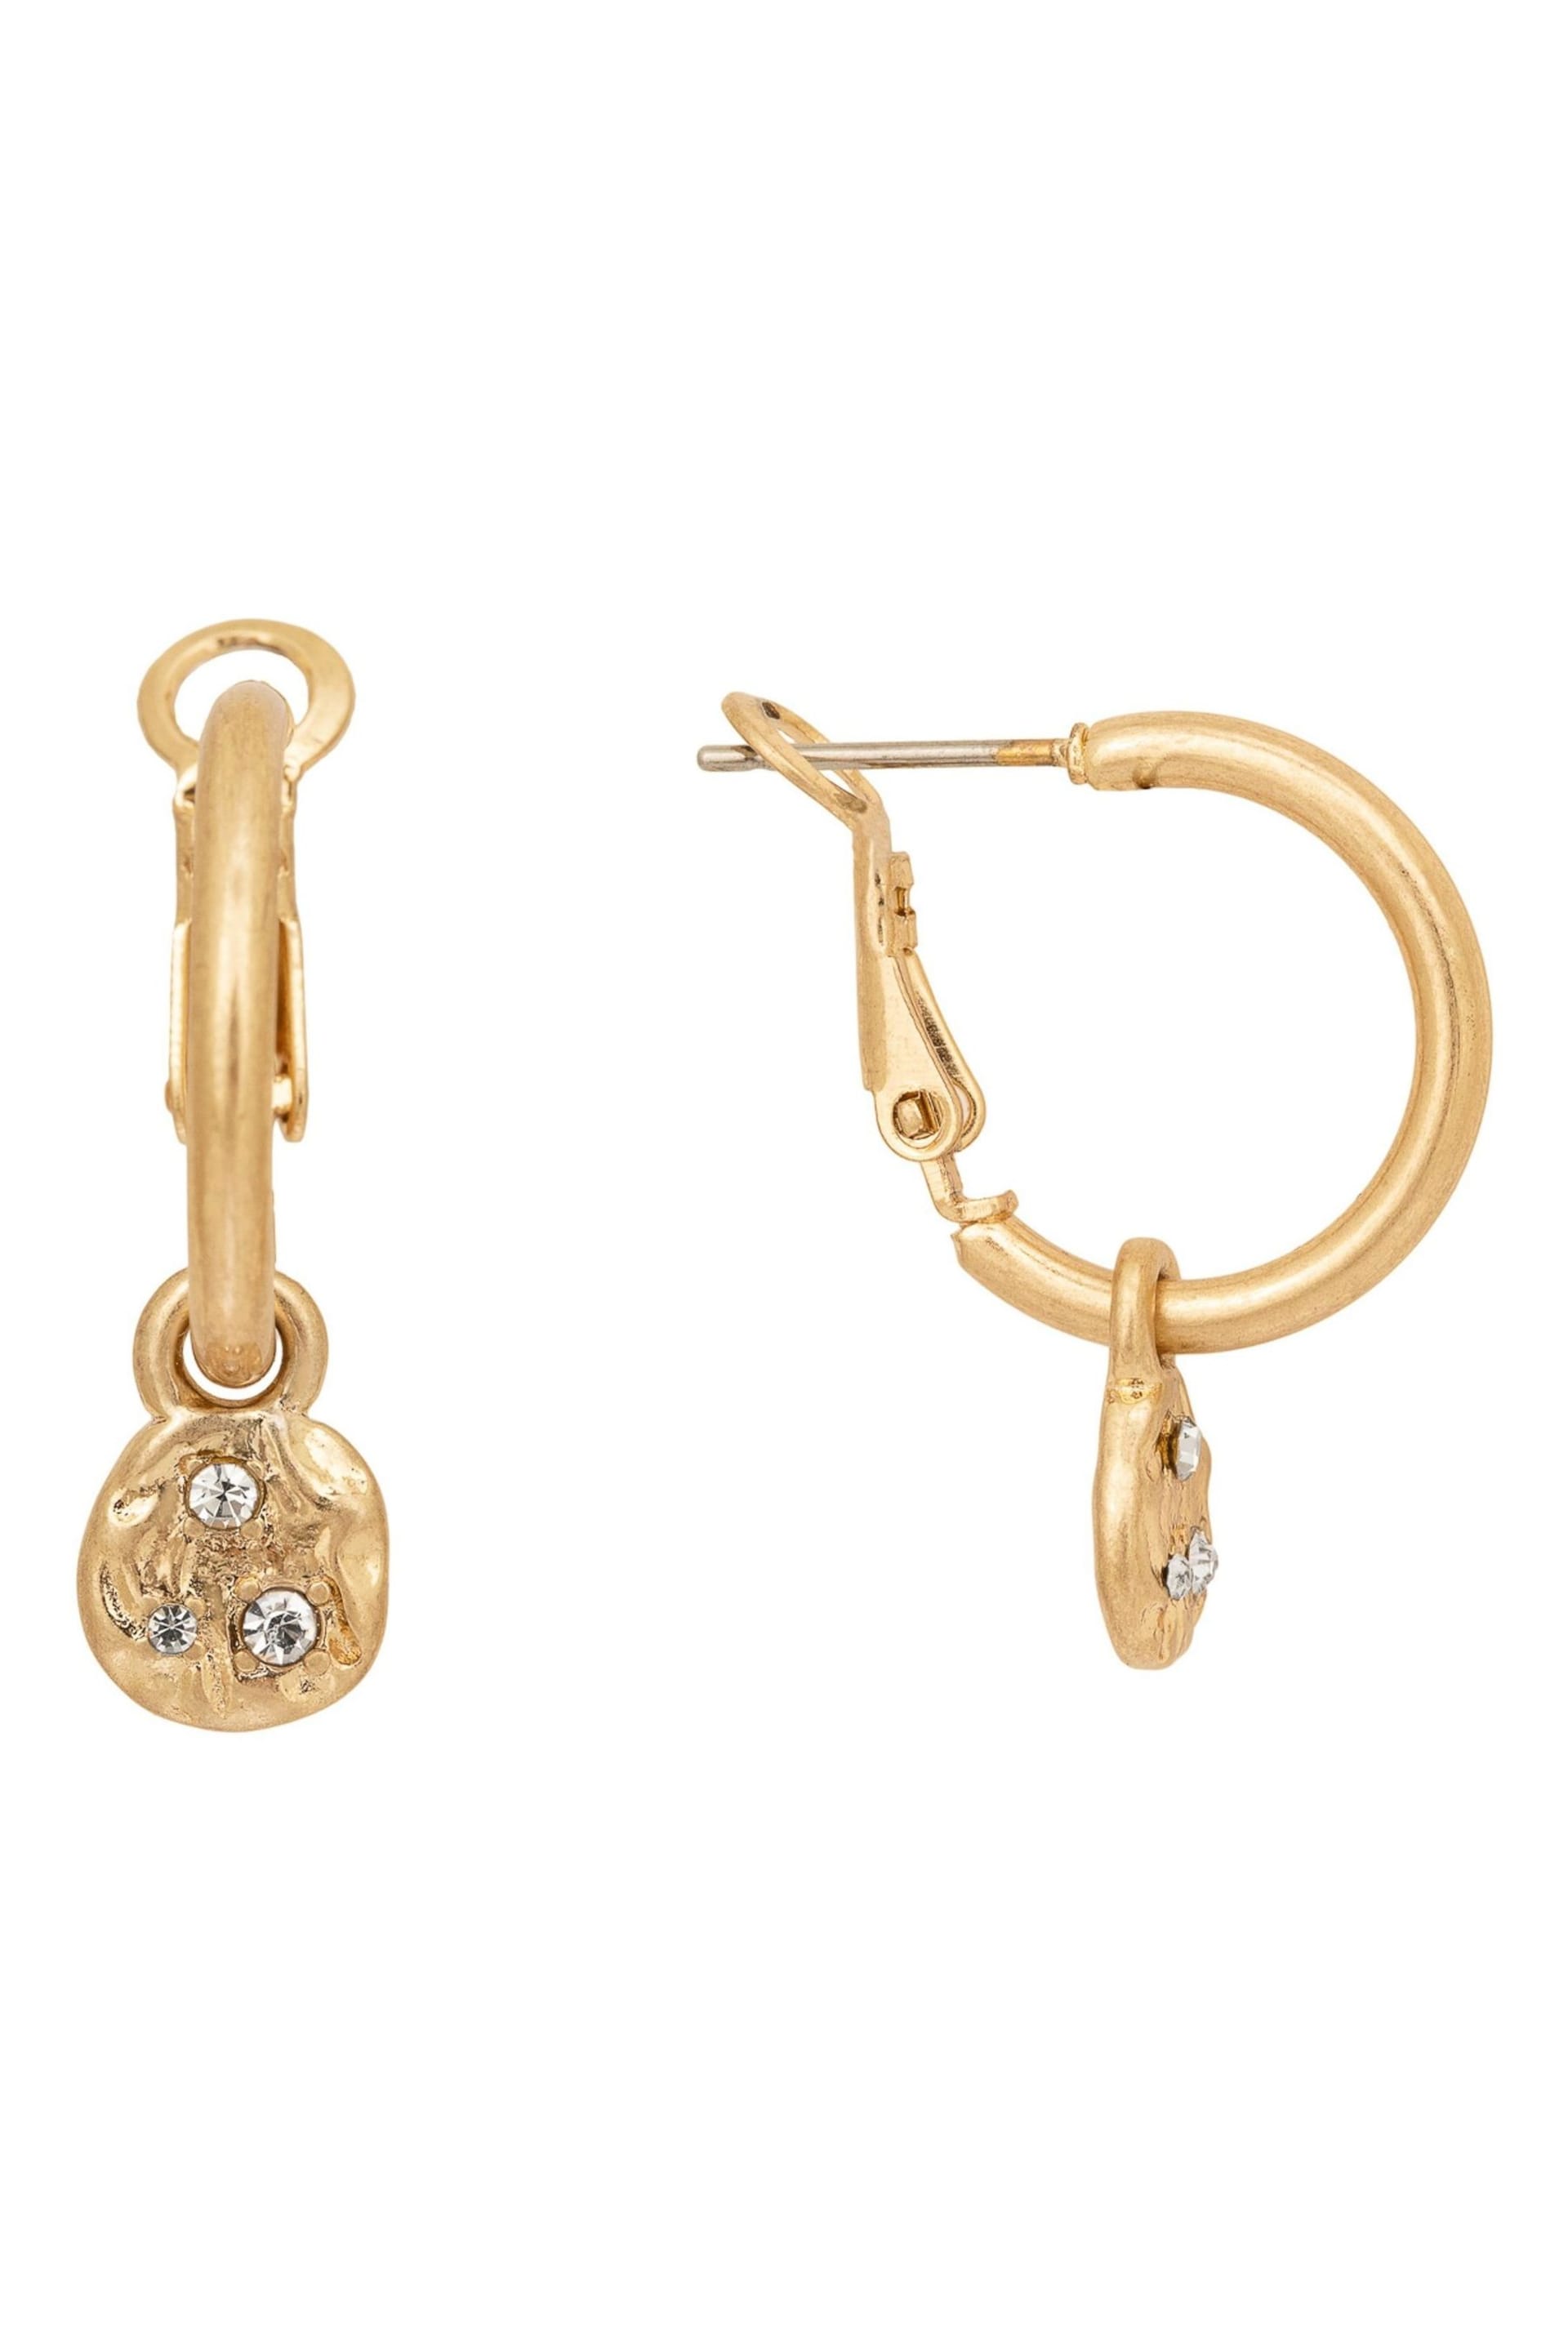 Bibi Bijoux Gold Tone 'Radiance' Bracelet and Earrings Set - Image 3 of 4